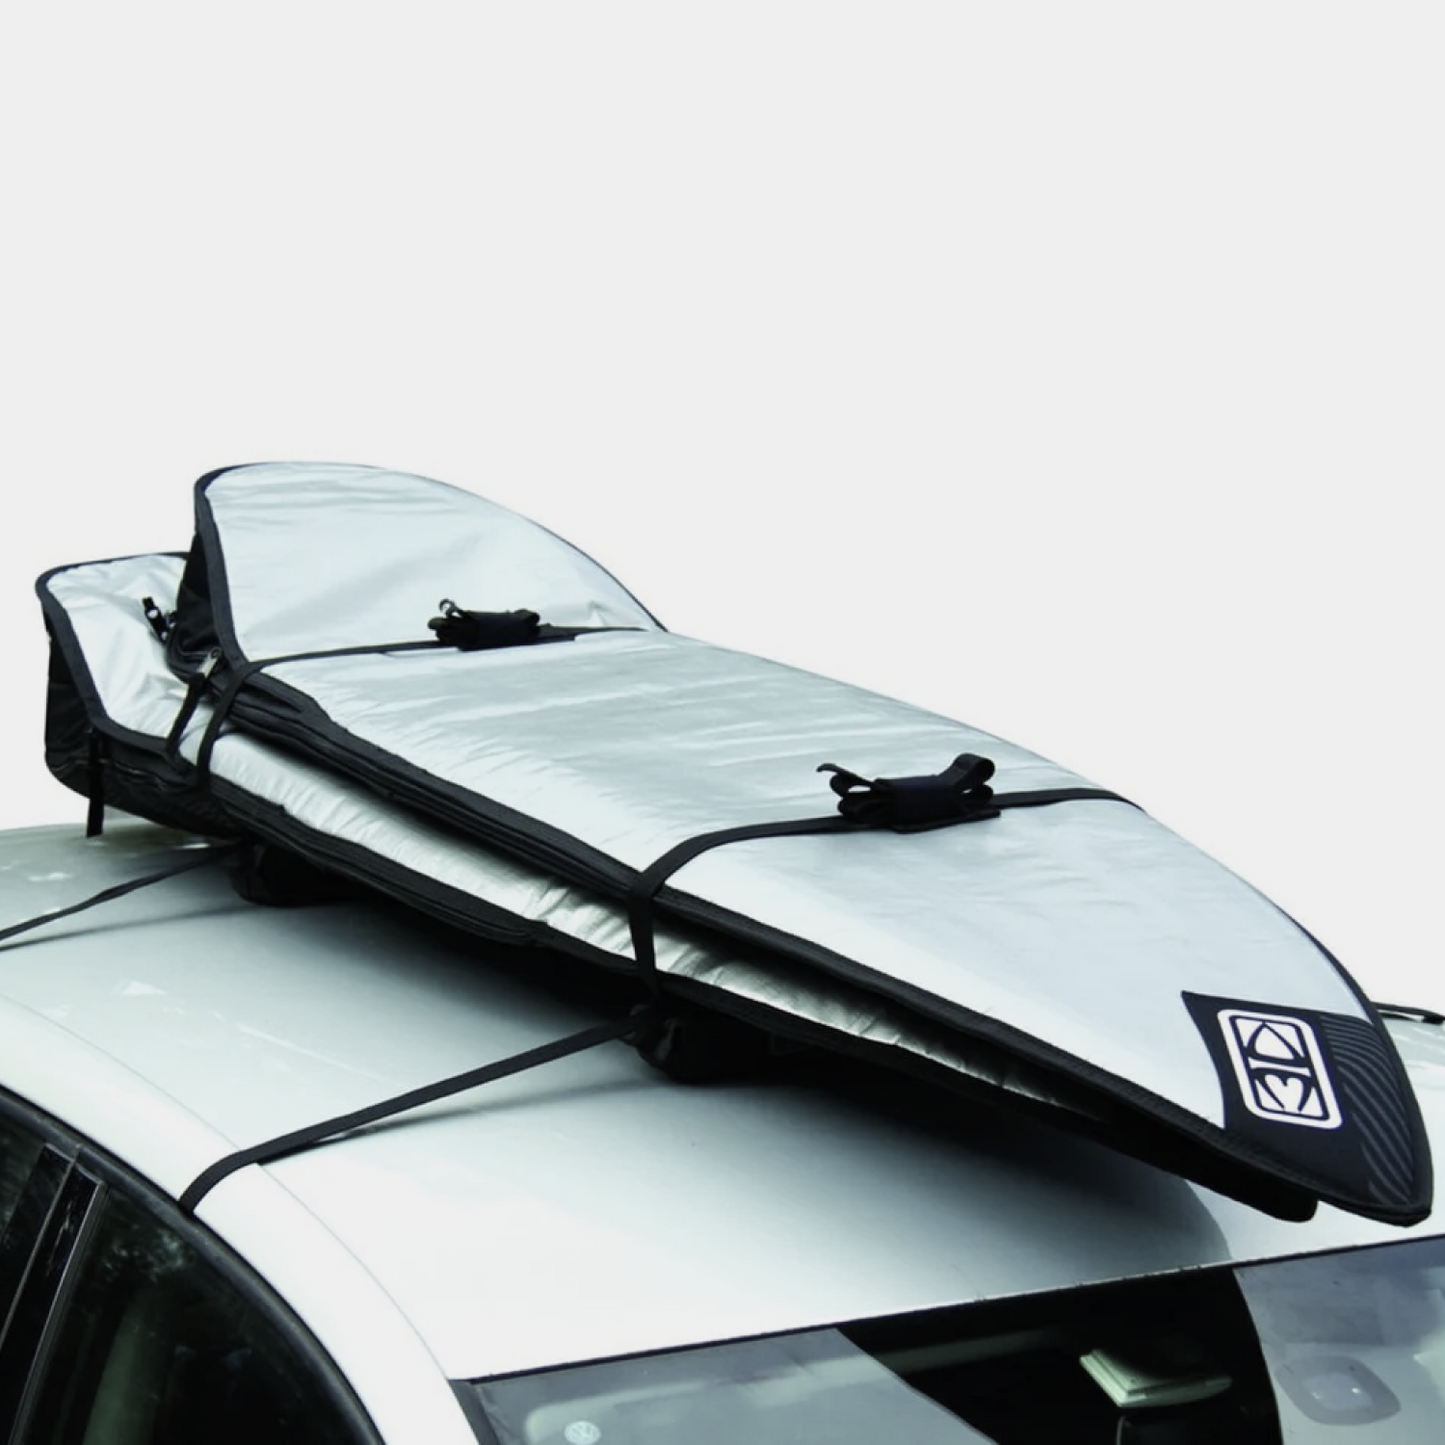 Ocean & Earth Quick Rax Portable Car Surfboard Soft Rack System